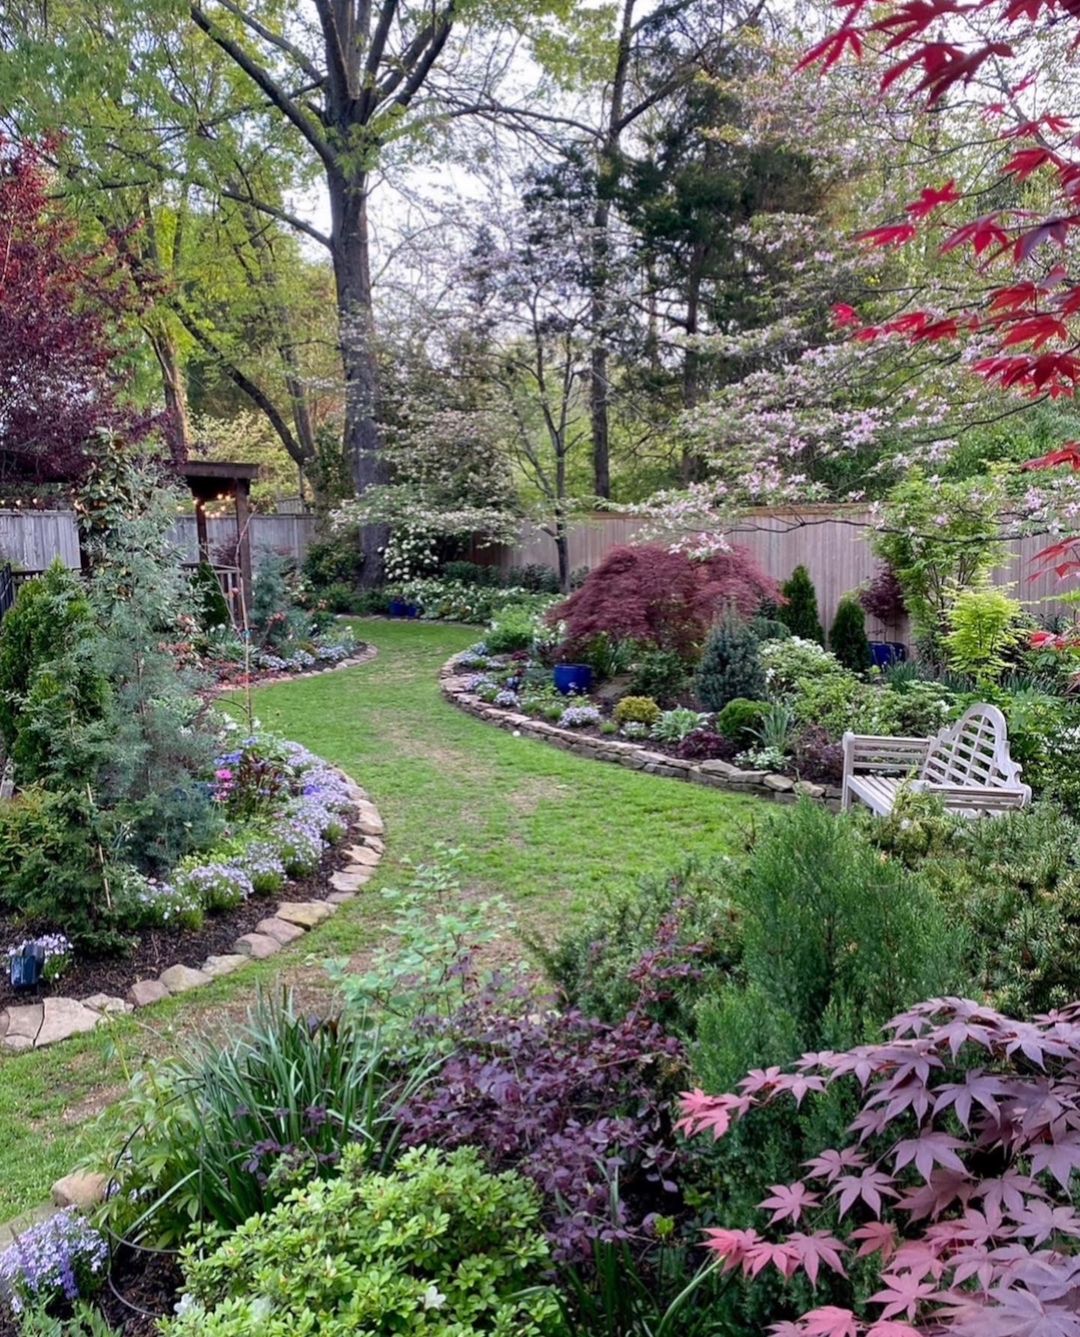 Transform Your Outdoor Space with Unique
Garden Paver Ideas